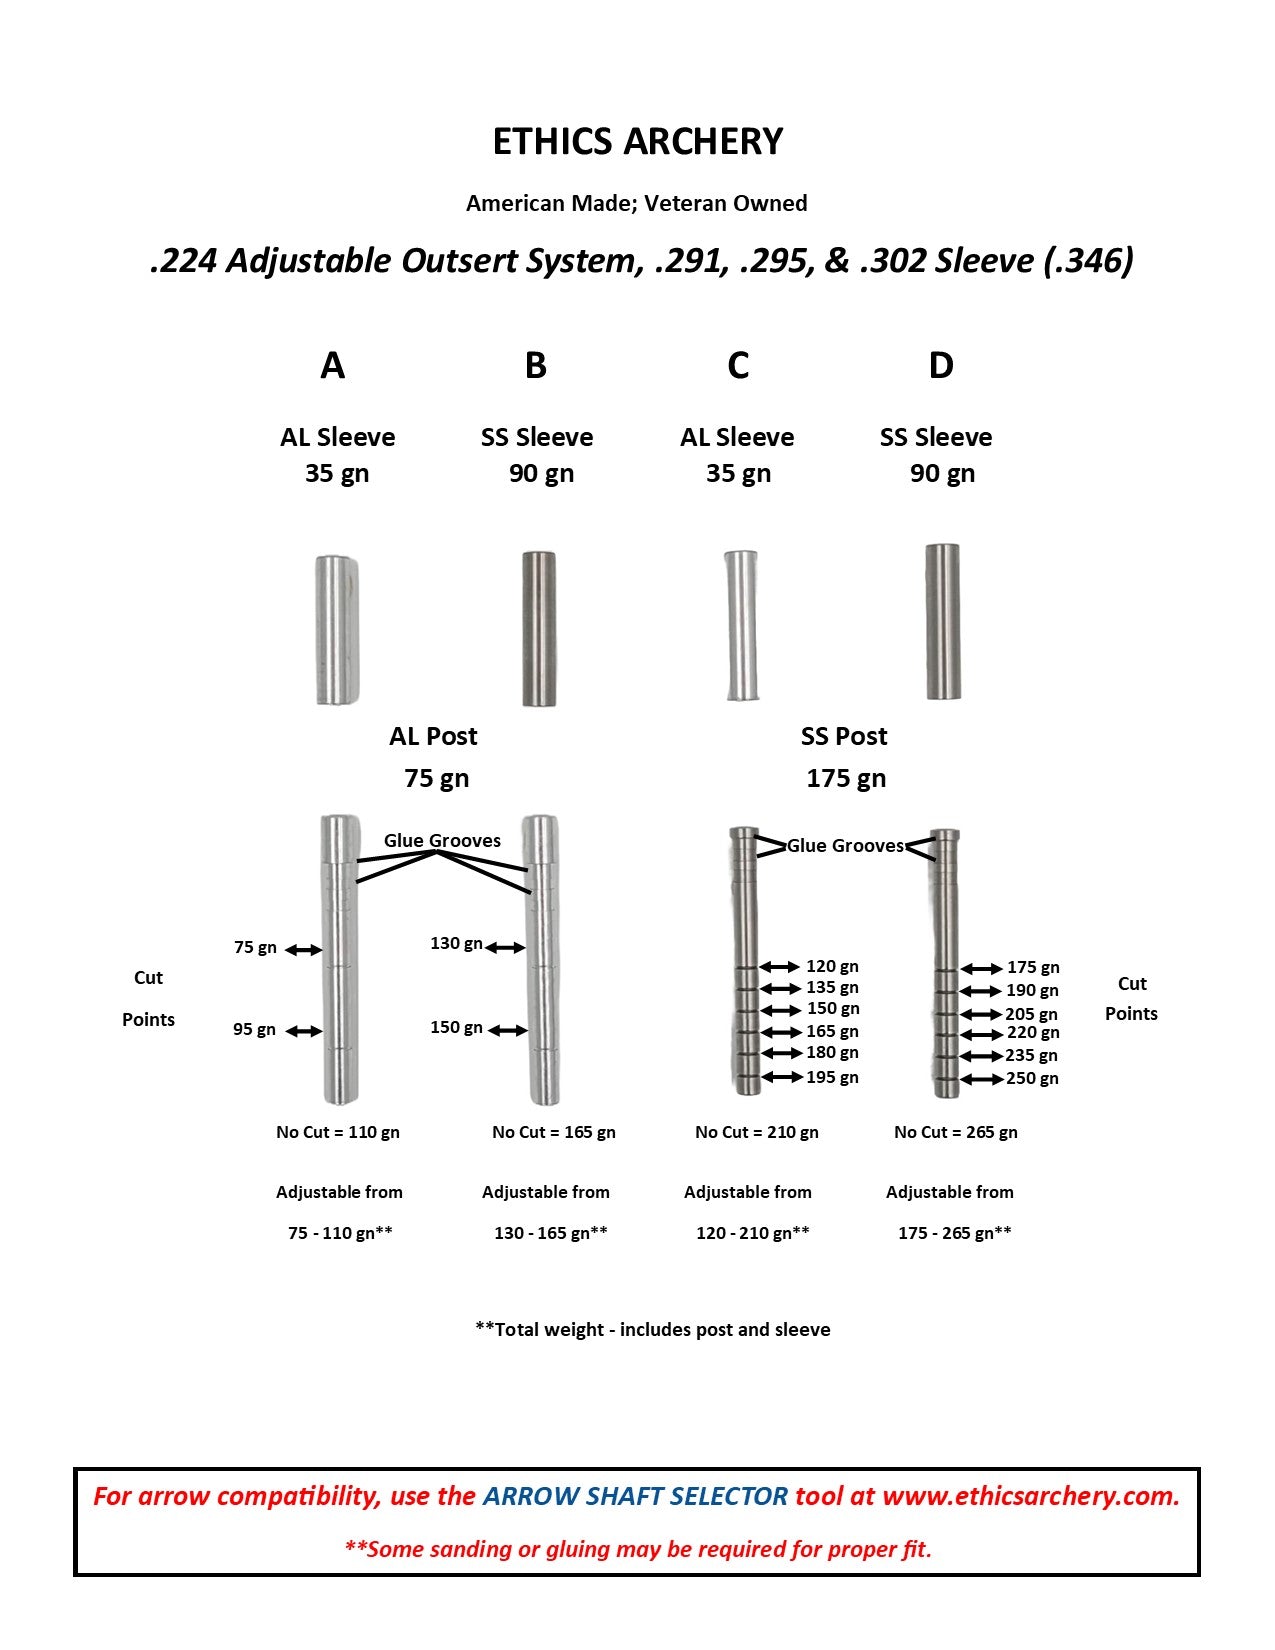 Adjustable Outsert System, .224, .295 Sleeve (.346)